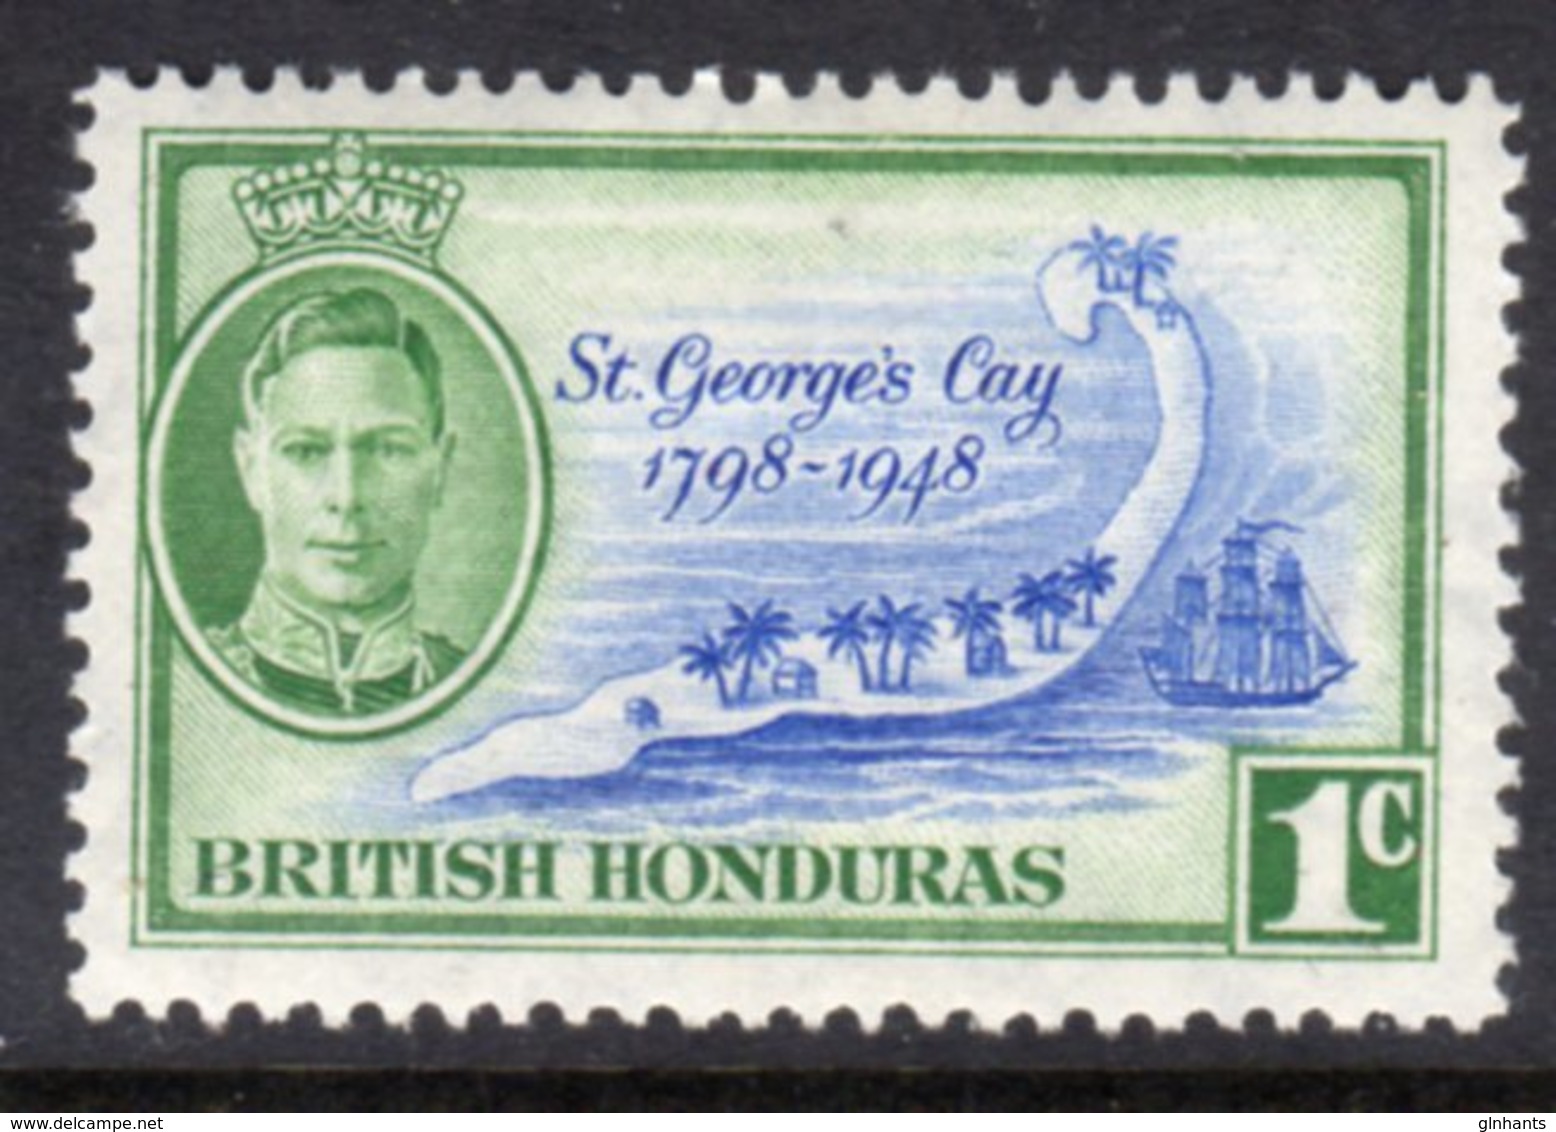 BRITISH HONDURAS - 1949 1c SHIP STAMP FINE MINT MM * SG166 - British Honduras (...-1970)